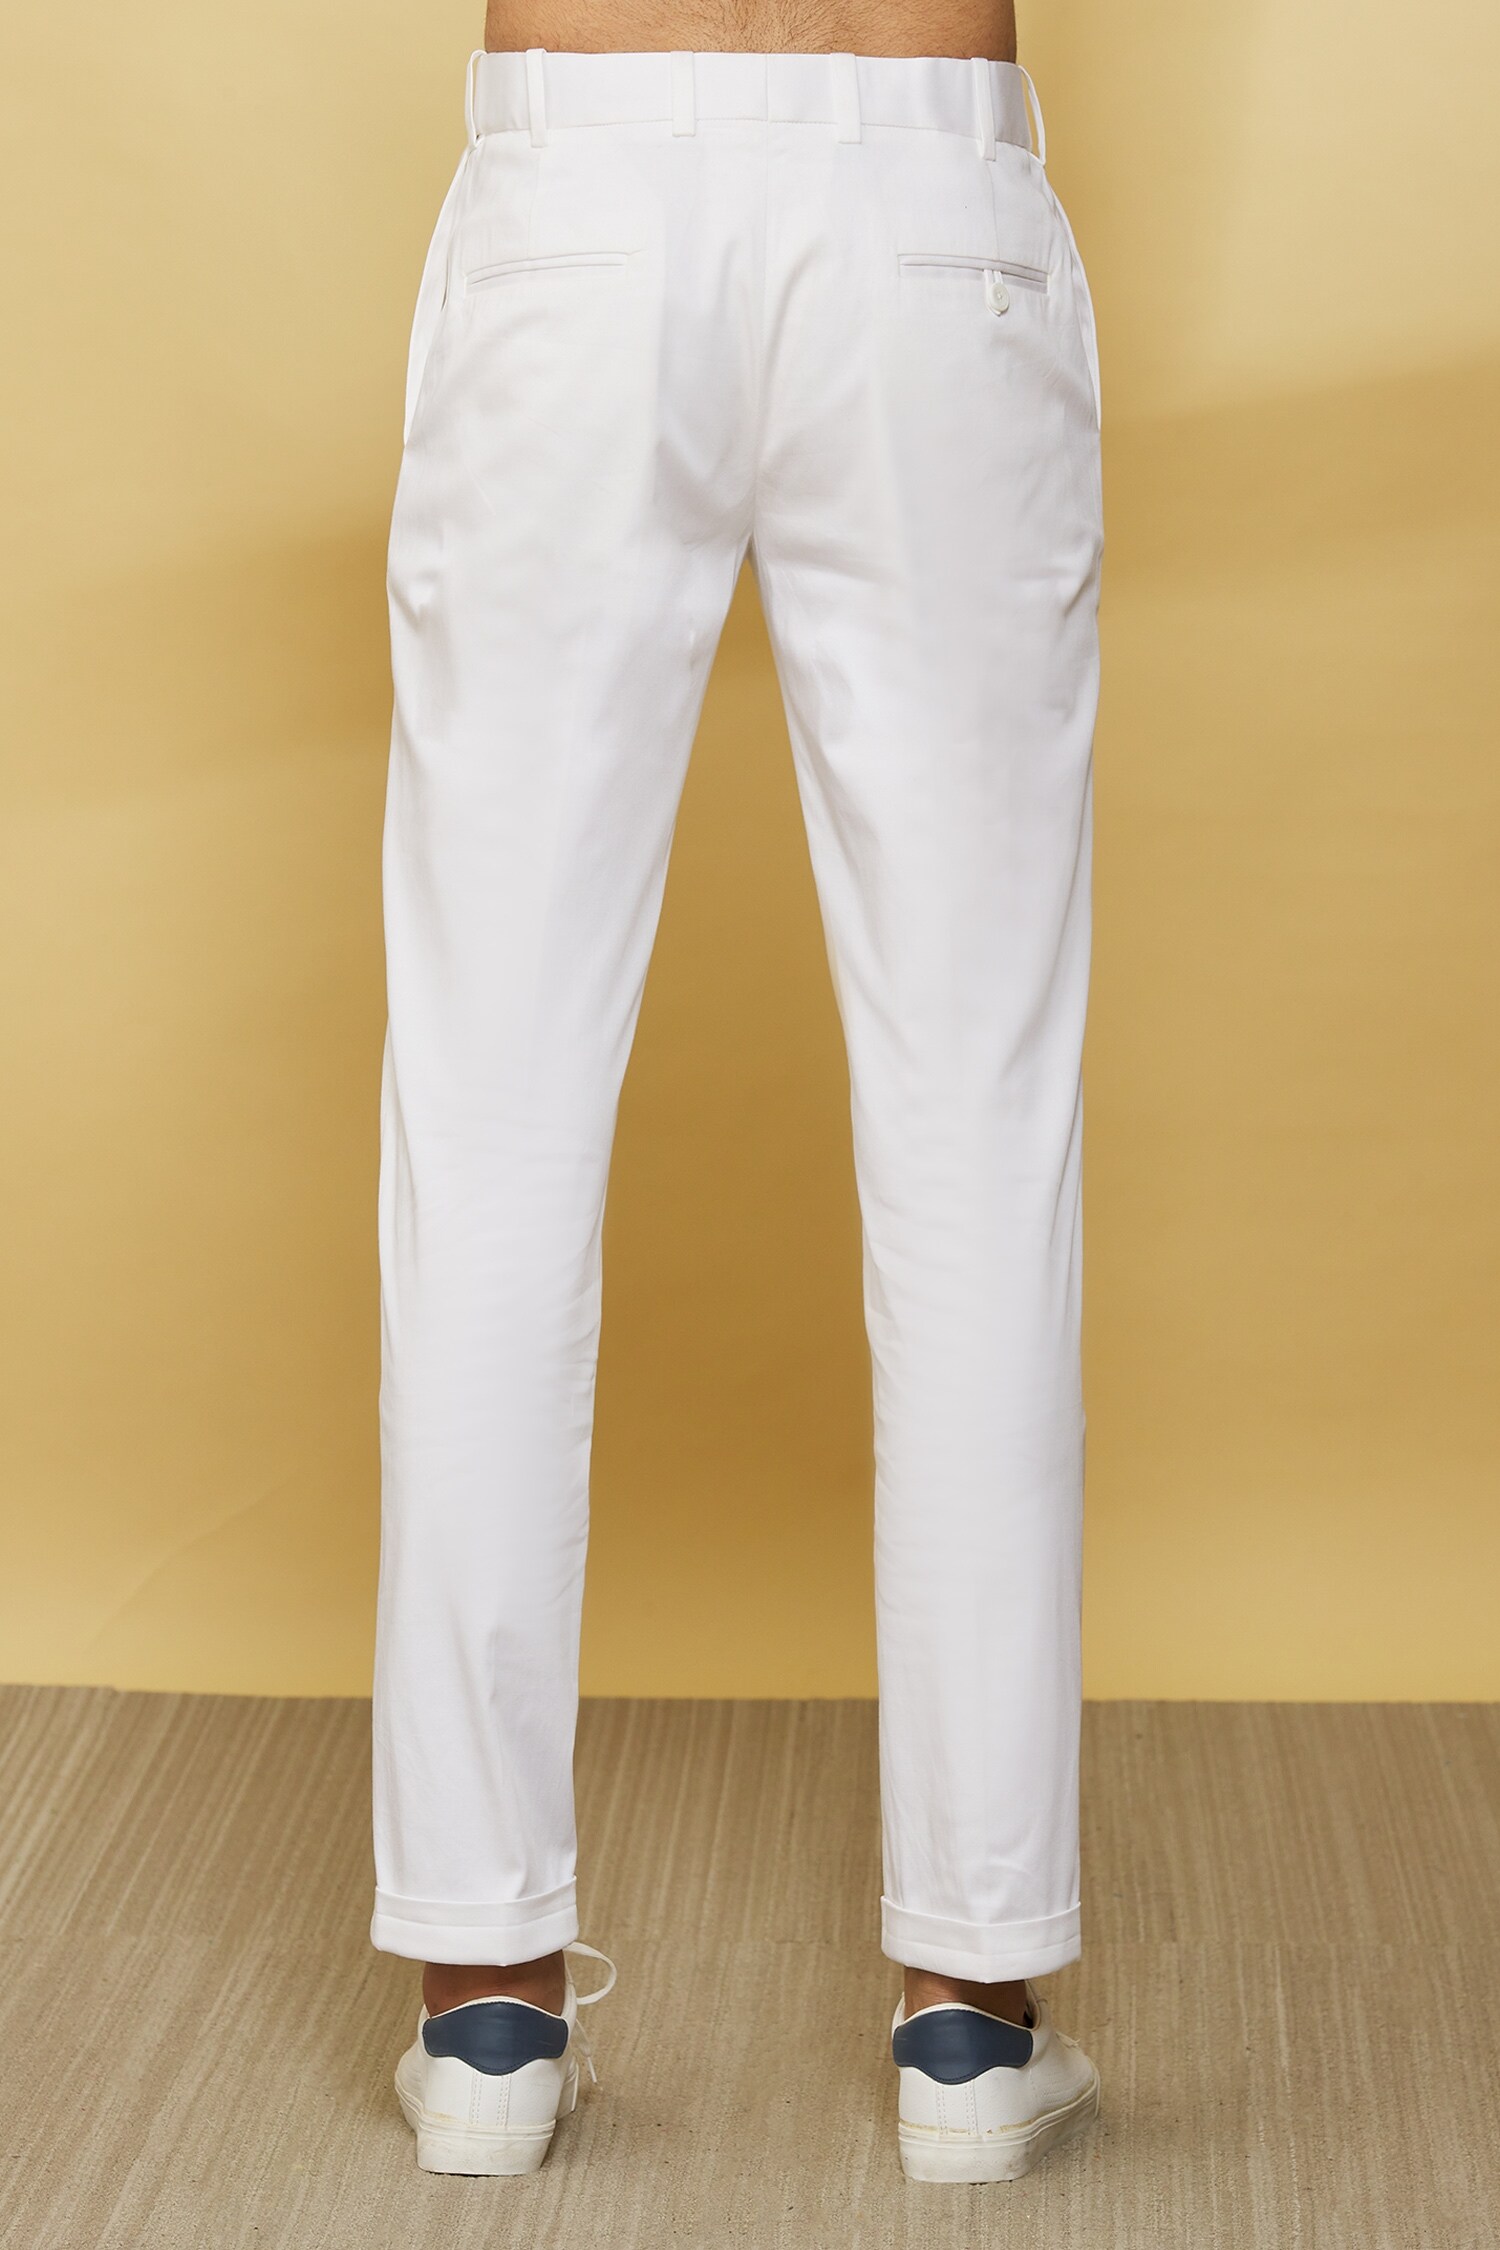 GSOON Slim Fit Men White Trousers - Buy GSOON Slim Fit Men White Trousers  Online at Best Prices in India | Flipkart.com